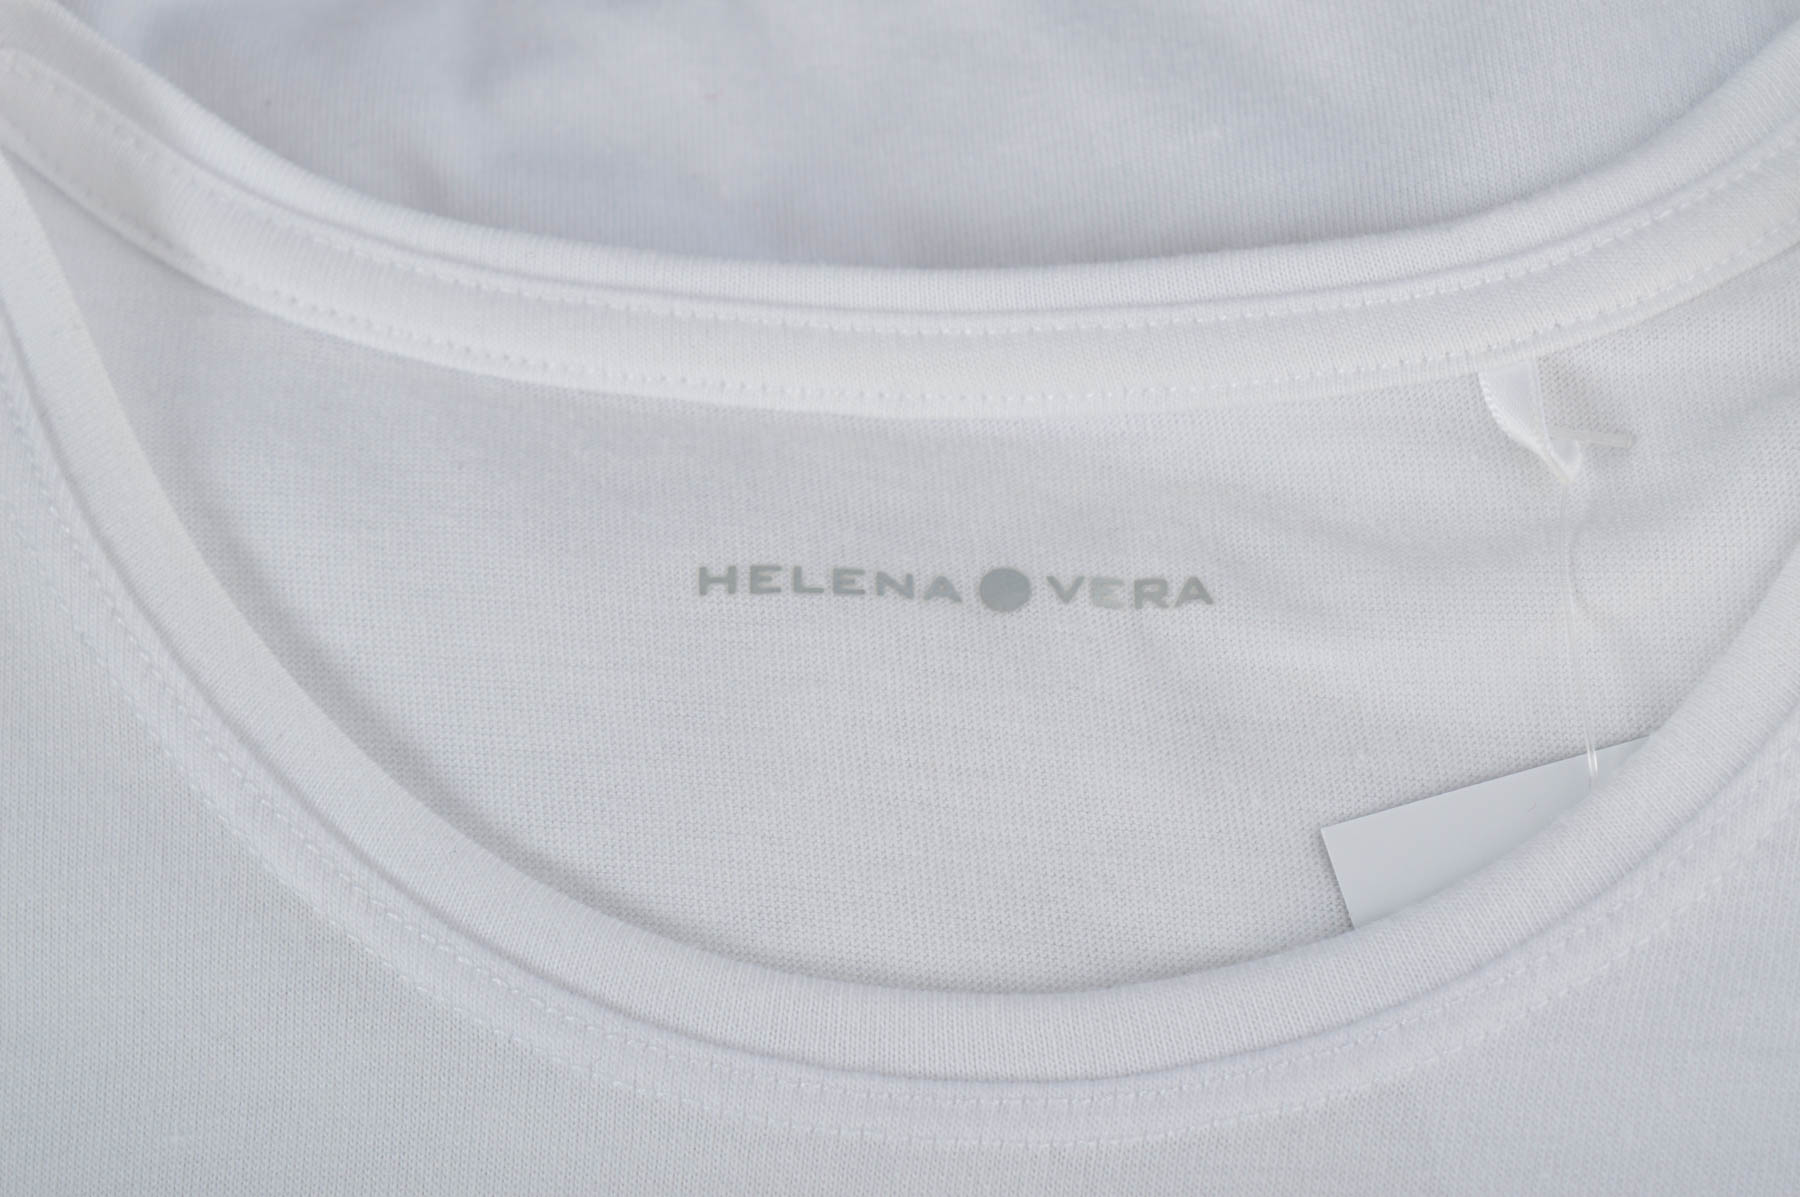 Koszulka damska - Helena Vera - 2